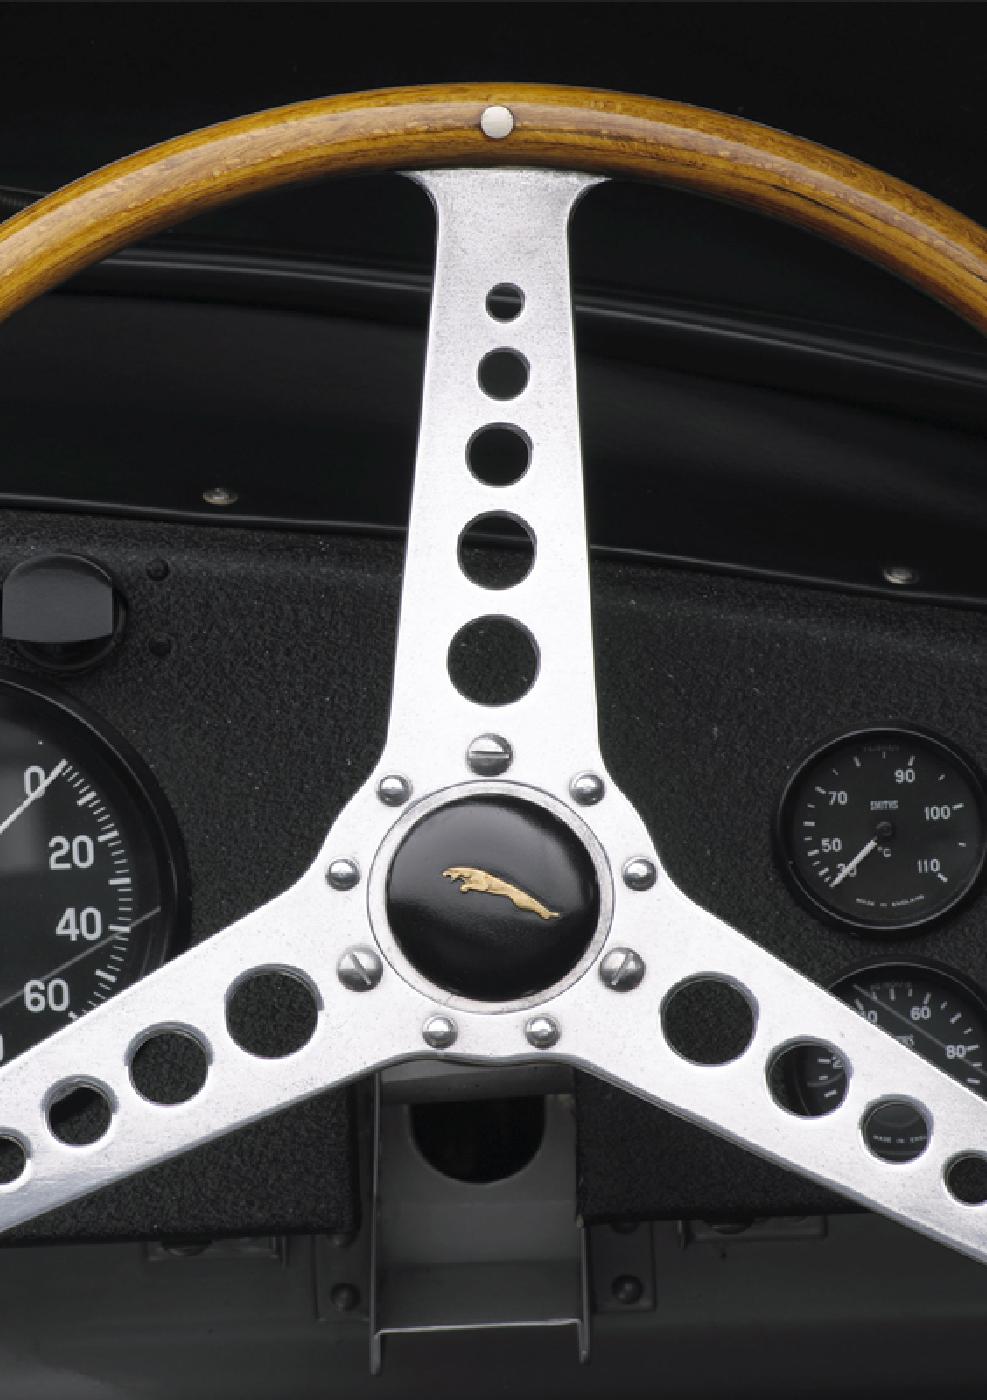                             The Jaguar&#x2019;s signature three-spoke steering wheel